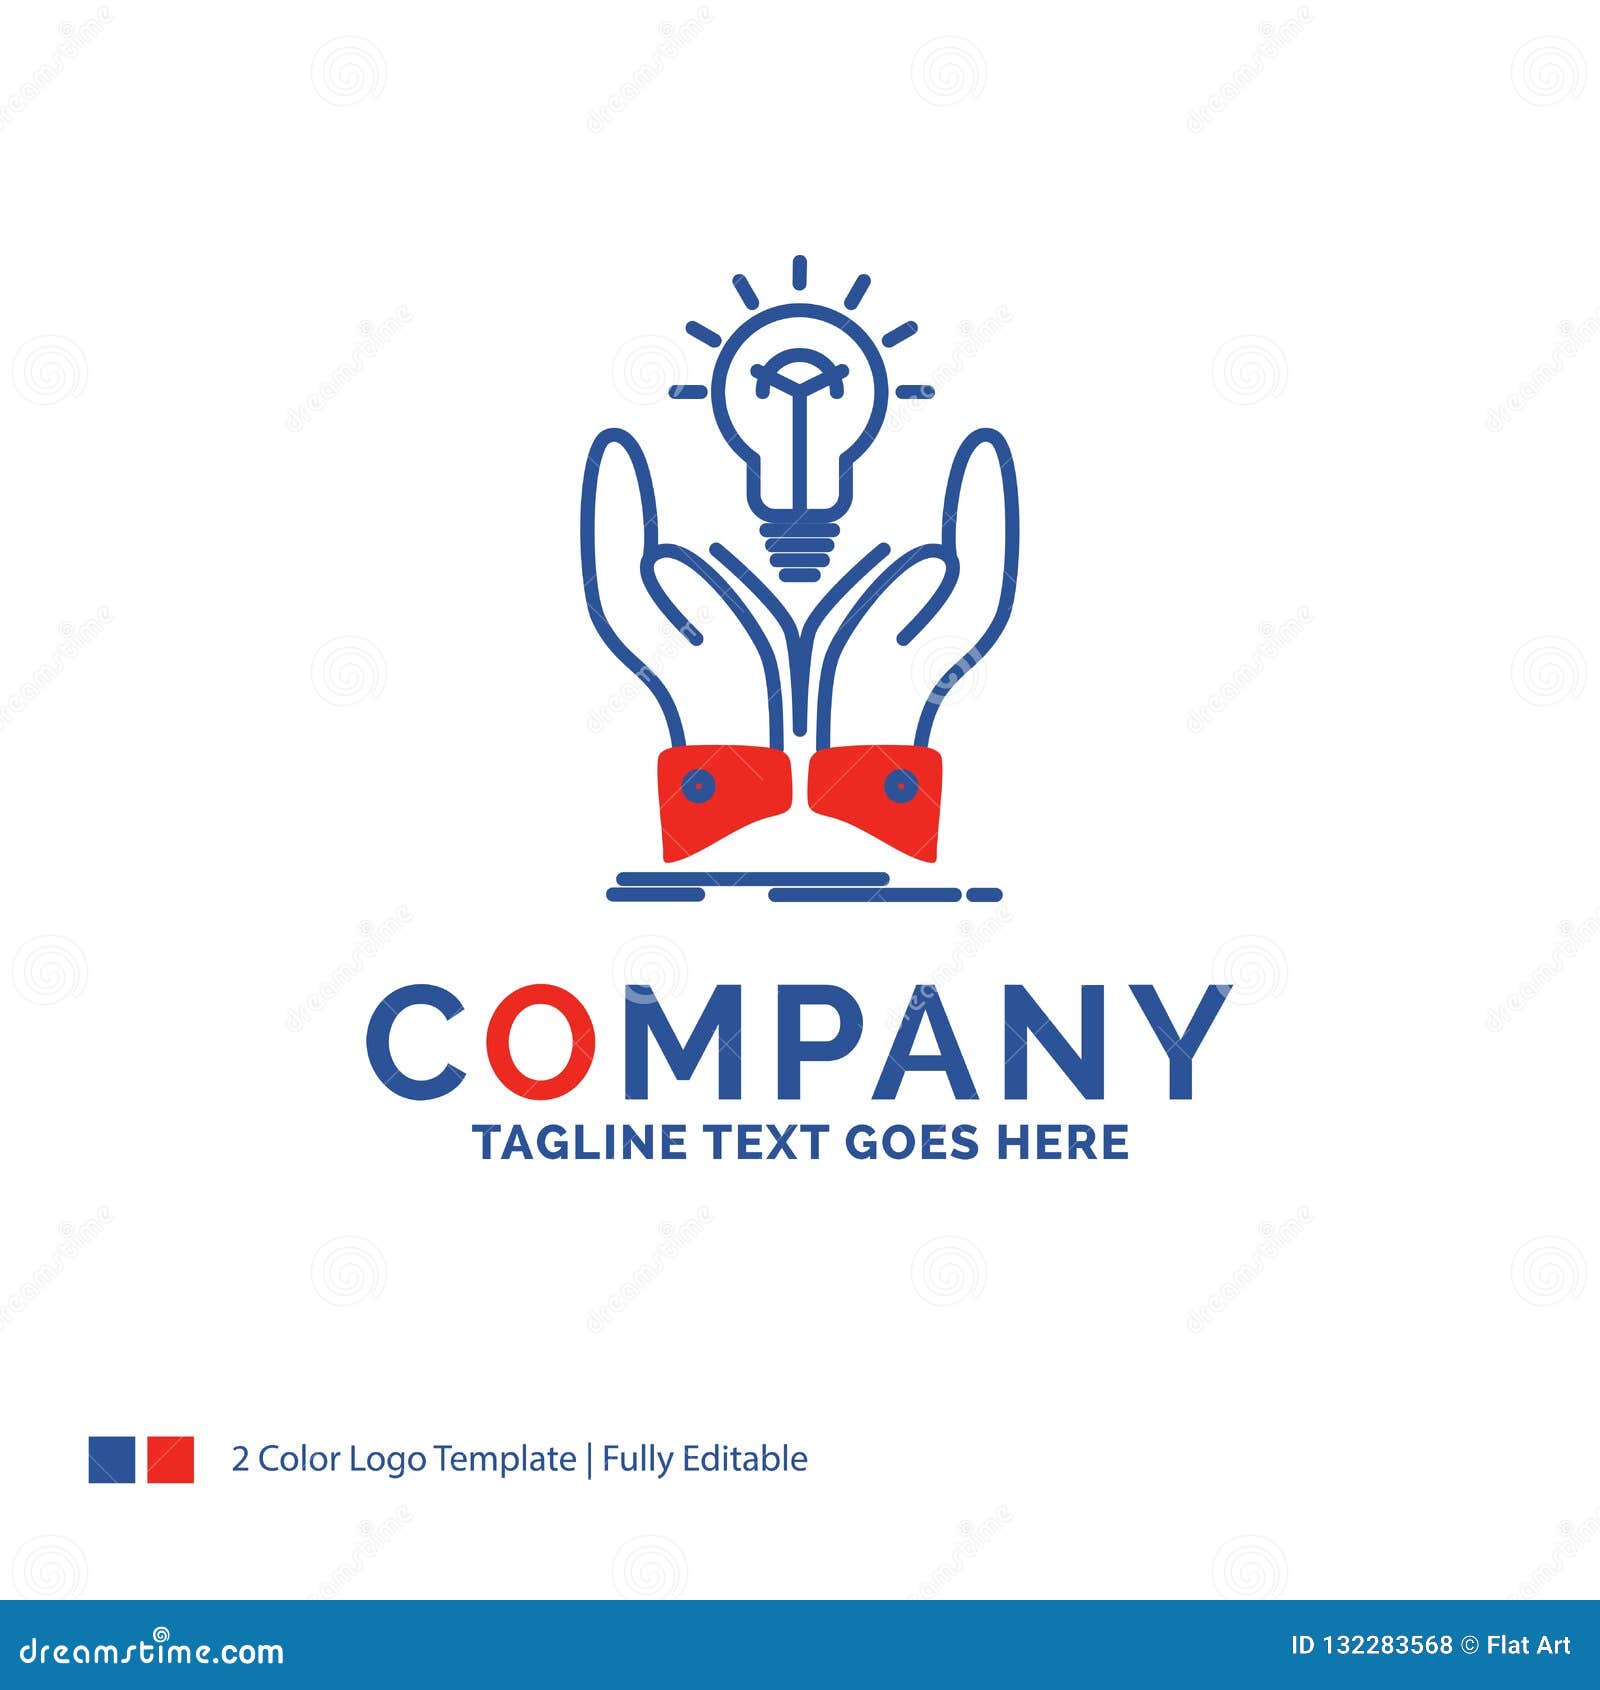 Company Name Logo Design For Idea Ideas Creative Share Hands Stock Vector Illustration Of Ideas Human